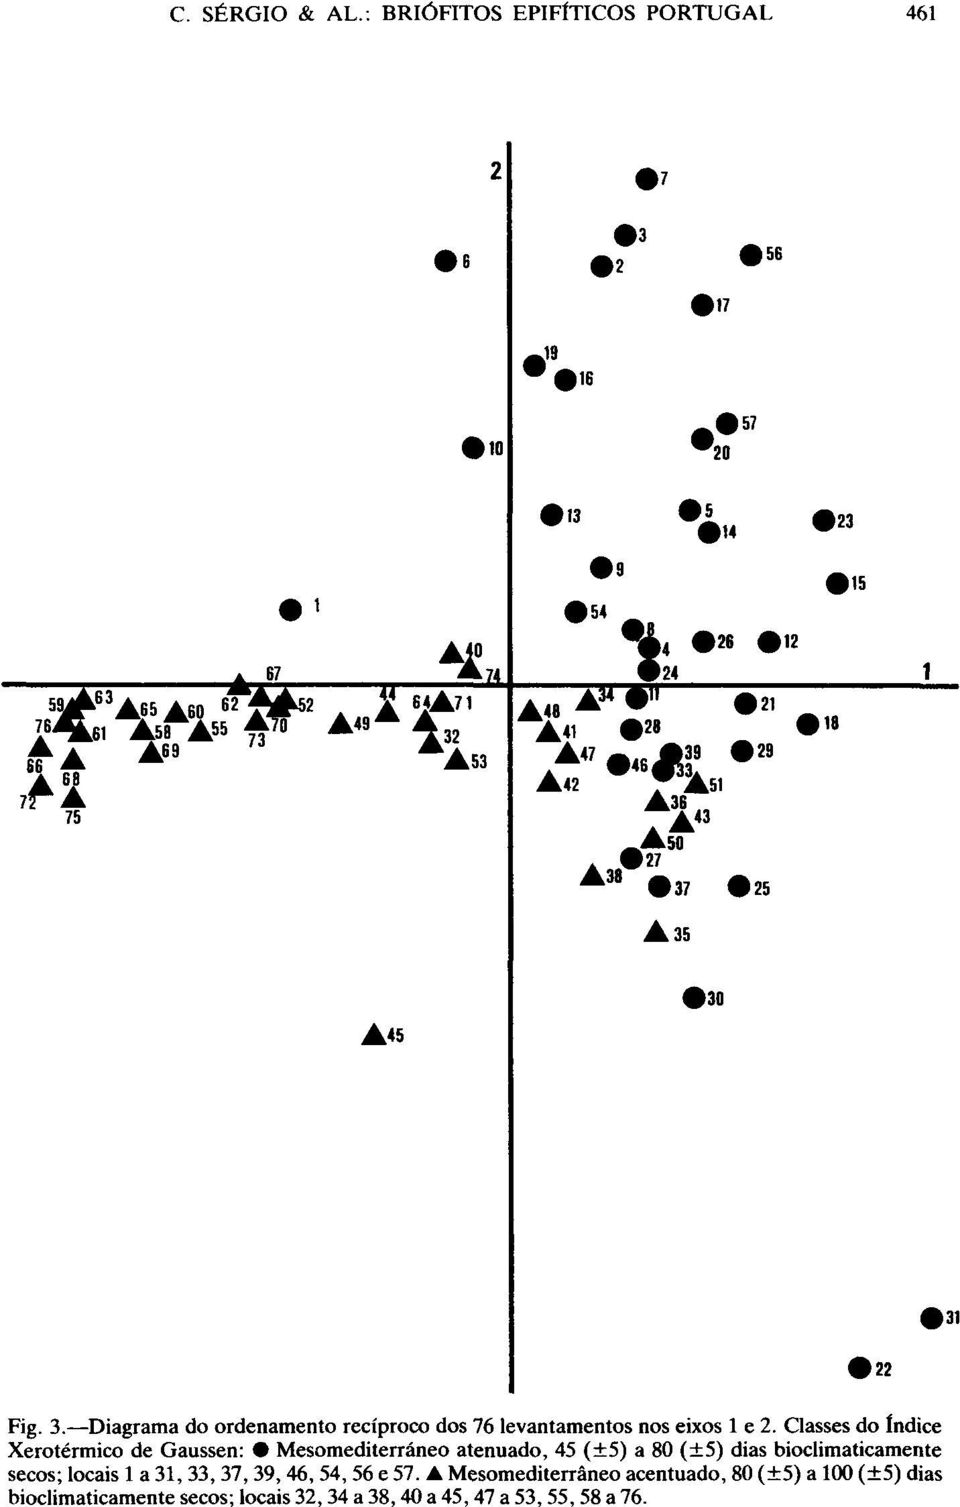 Classes do índice Xerotérmico de Gaussen: Mesomediterráneo atenuado, 45 (±5) a 80 (±5) dias